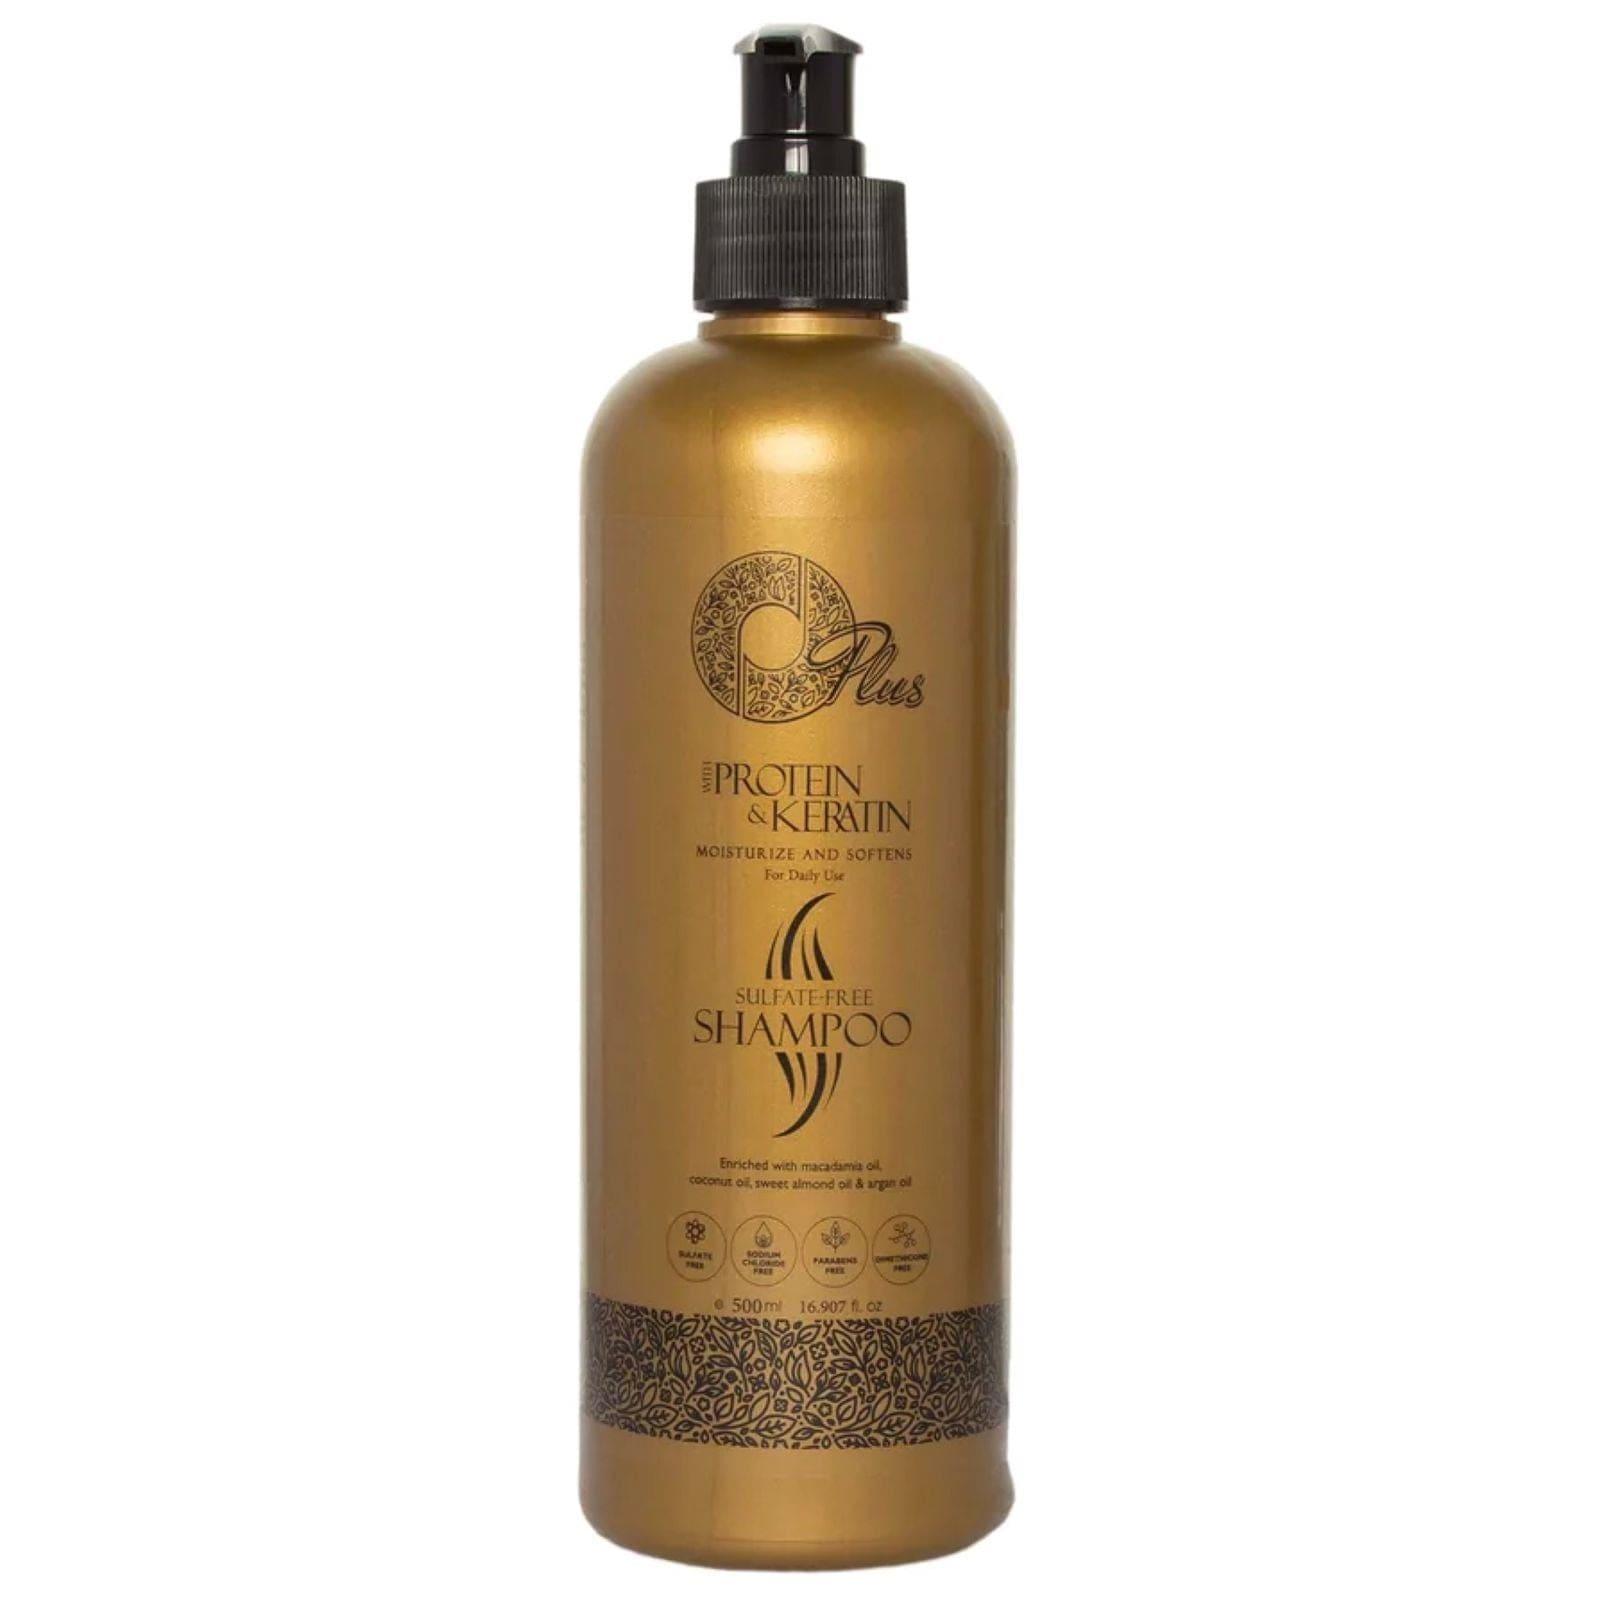 OPlus Protein & Keratin Sulfate Free Shampoo 500ml